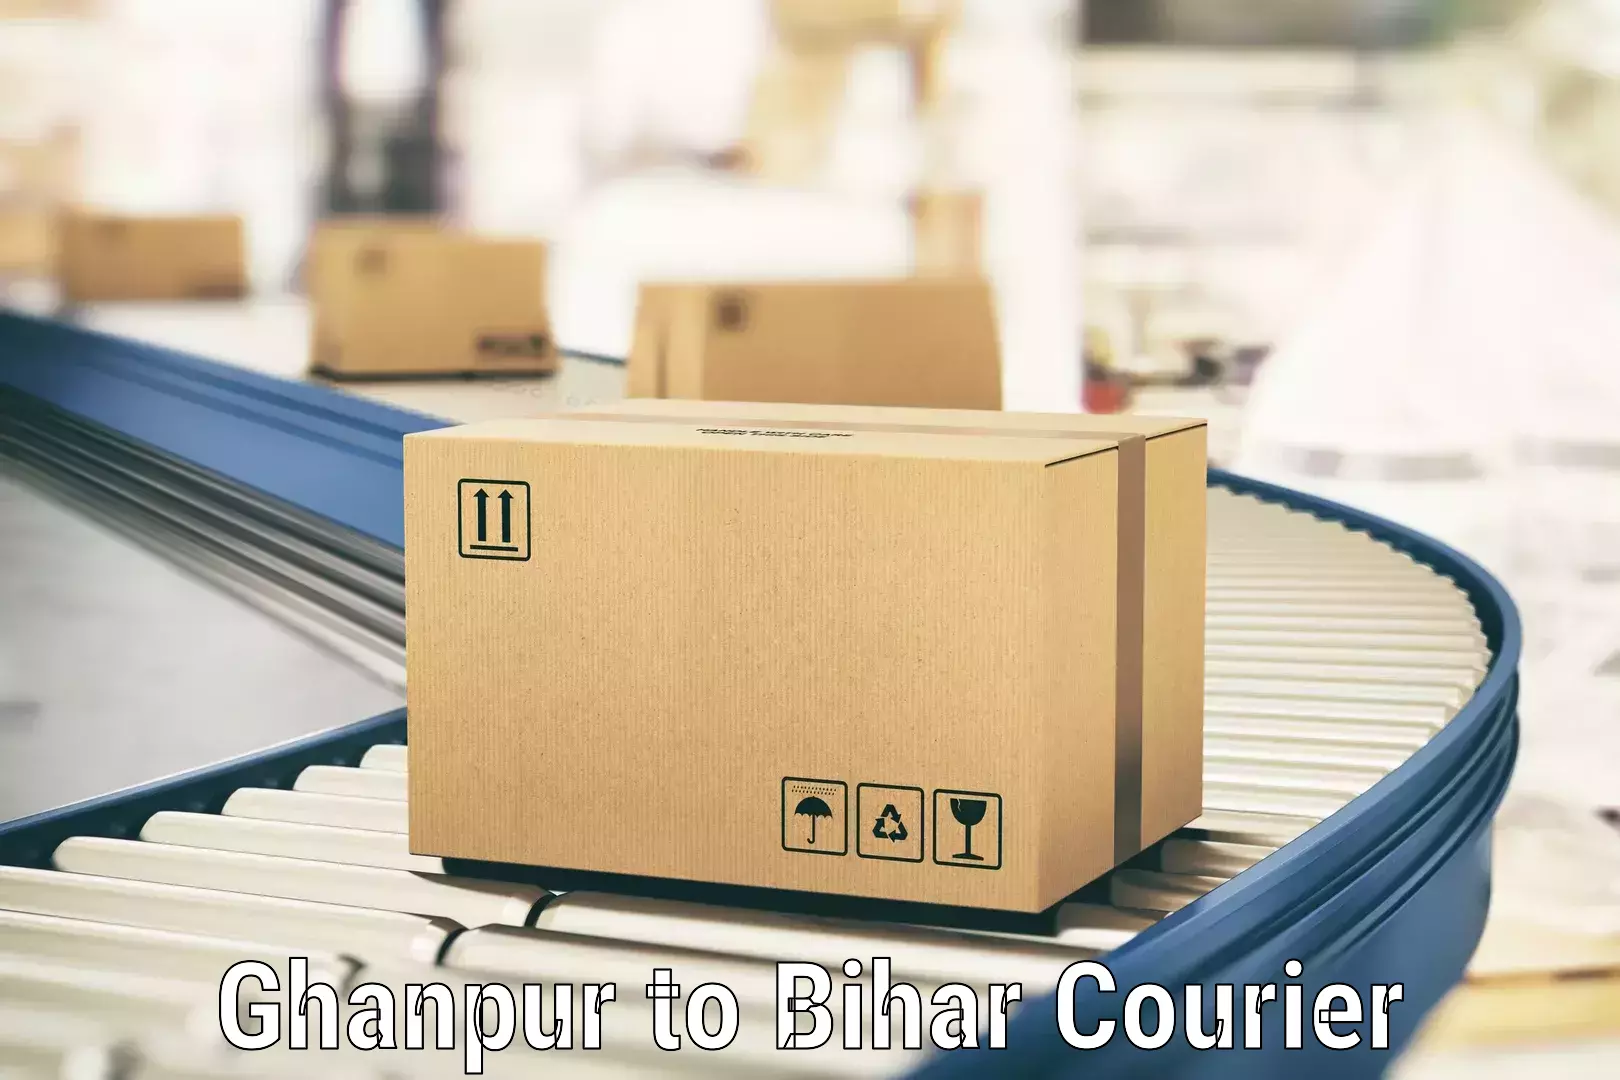 Logistics service provider Ghanpur to Deo Aurangabad